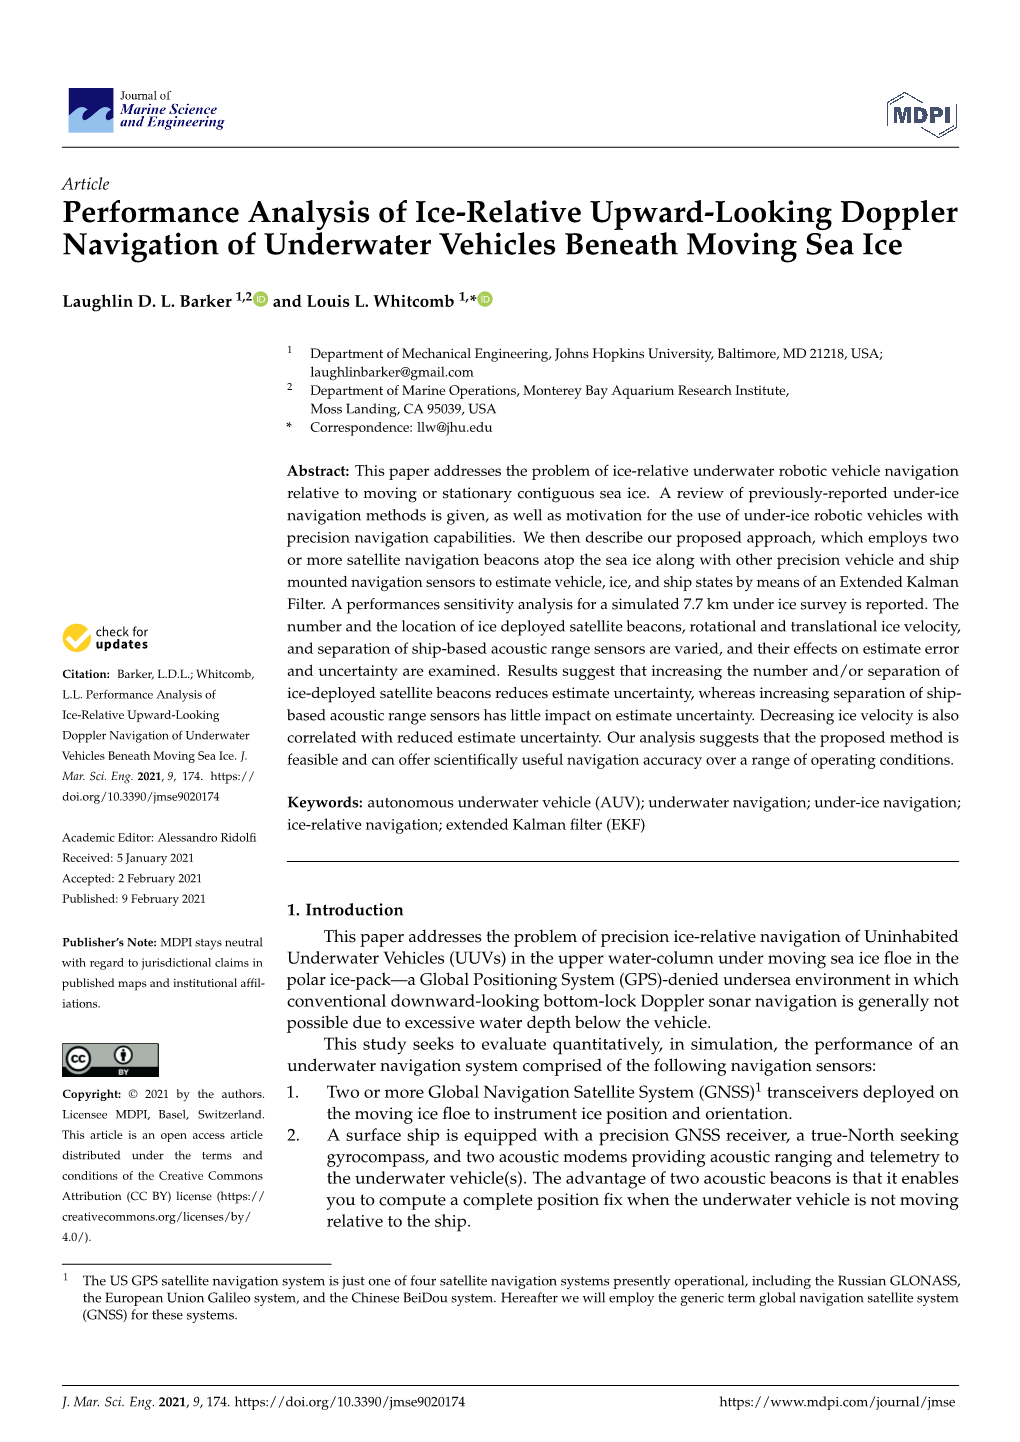 Performance Analysis of Ice-Relative Upward-Looking Doppler Navigation of Underwater Vehicles Beneath Moving Sea Ice